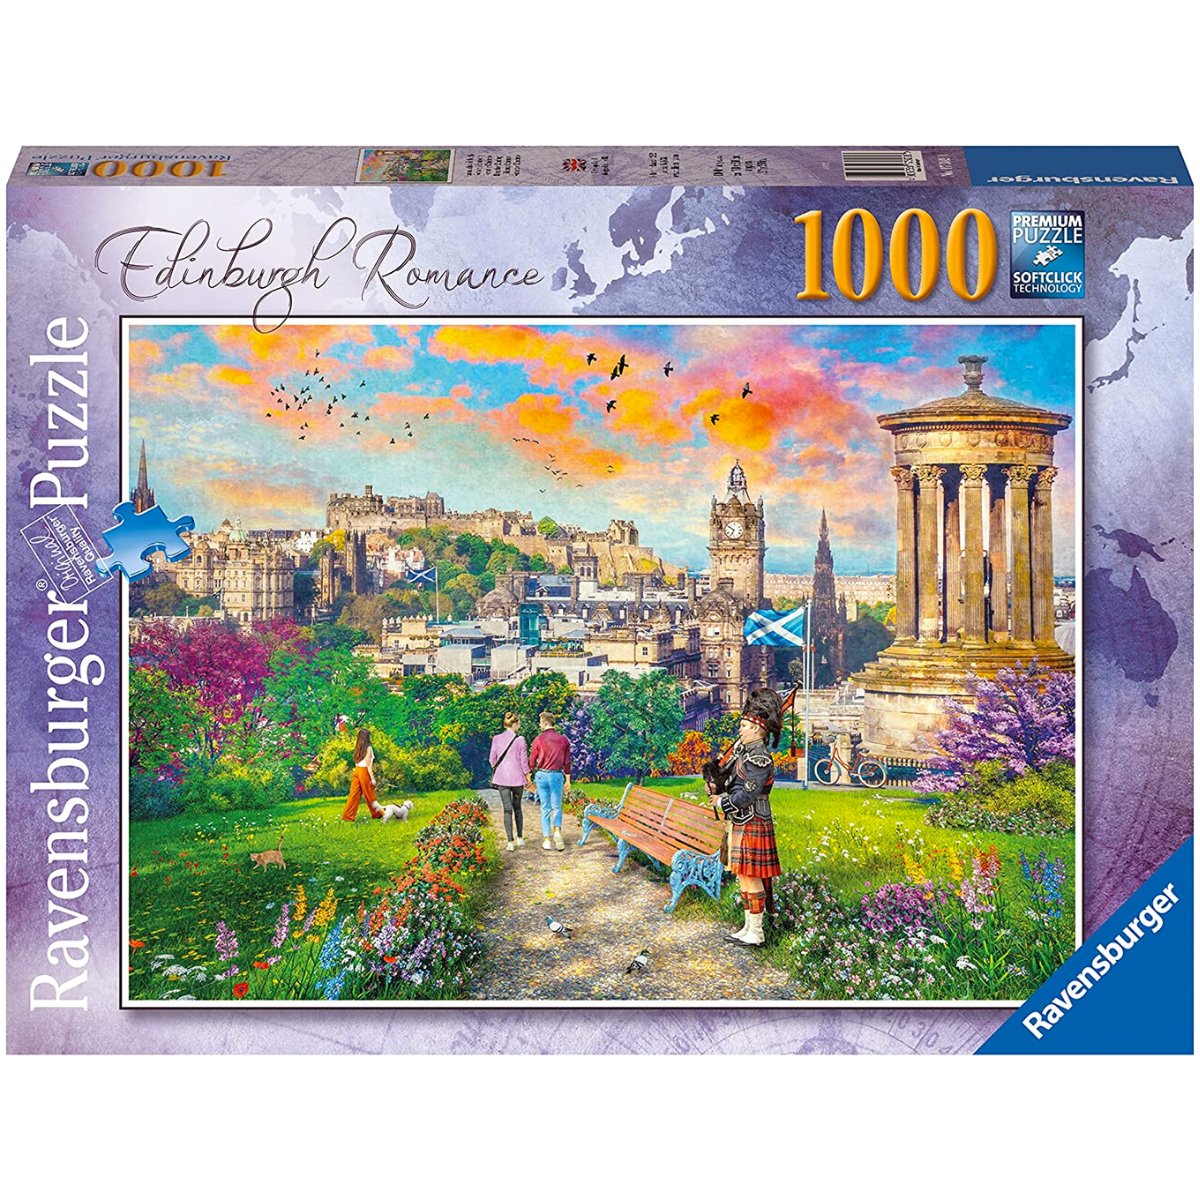 Ravensburger Edinburgh Romance 1000 Piece Jigsaw Puzzle - Phillips Hobbies